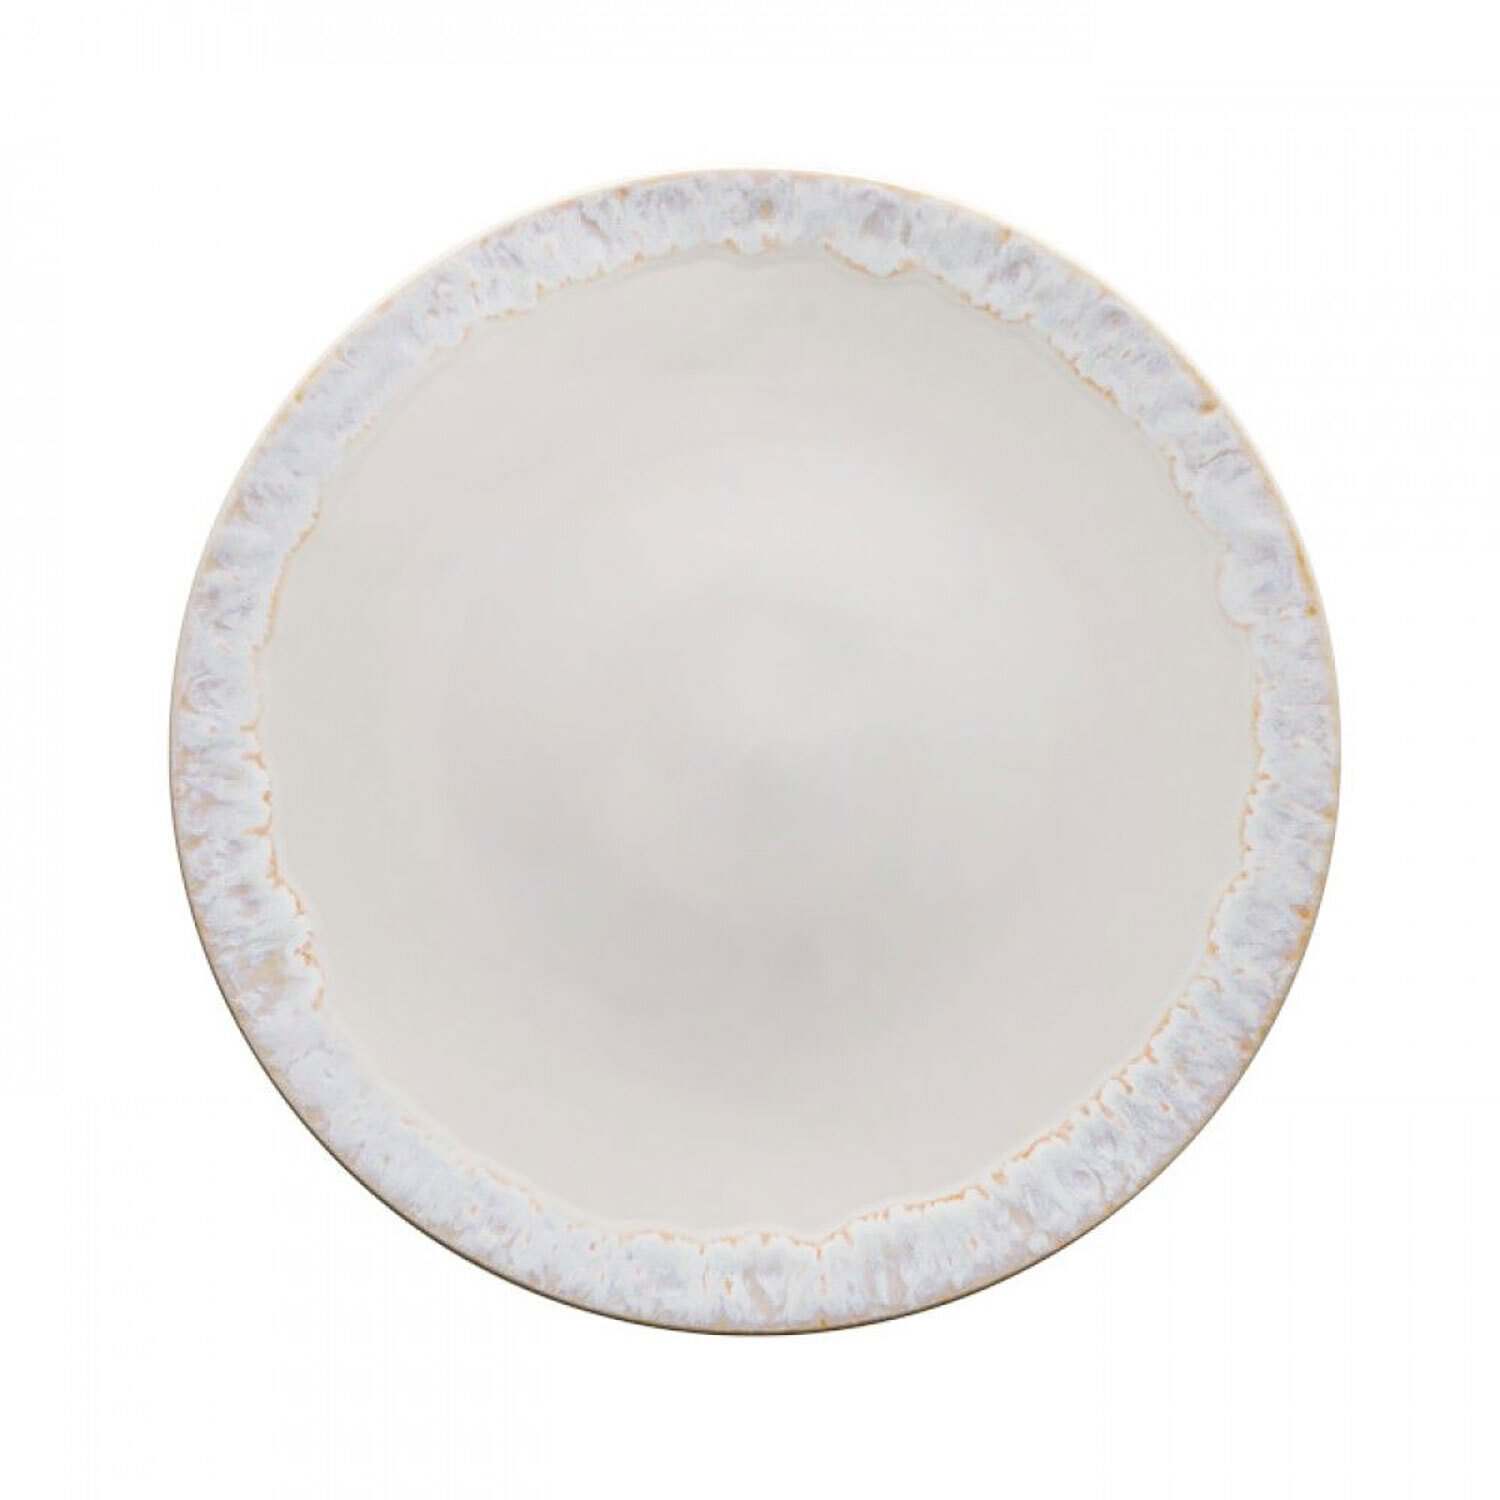 Casafina Taormina White Charger Plate TA600-WHI Set of 6